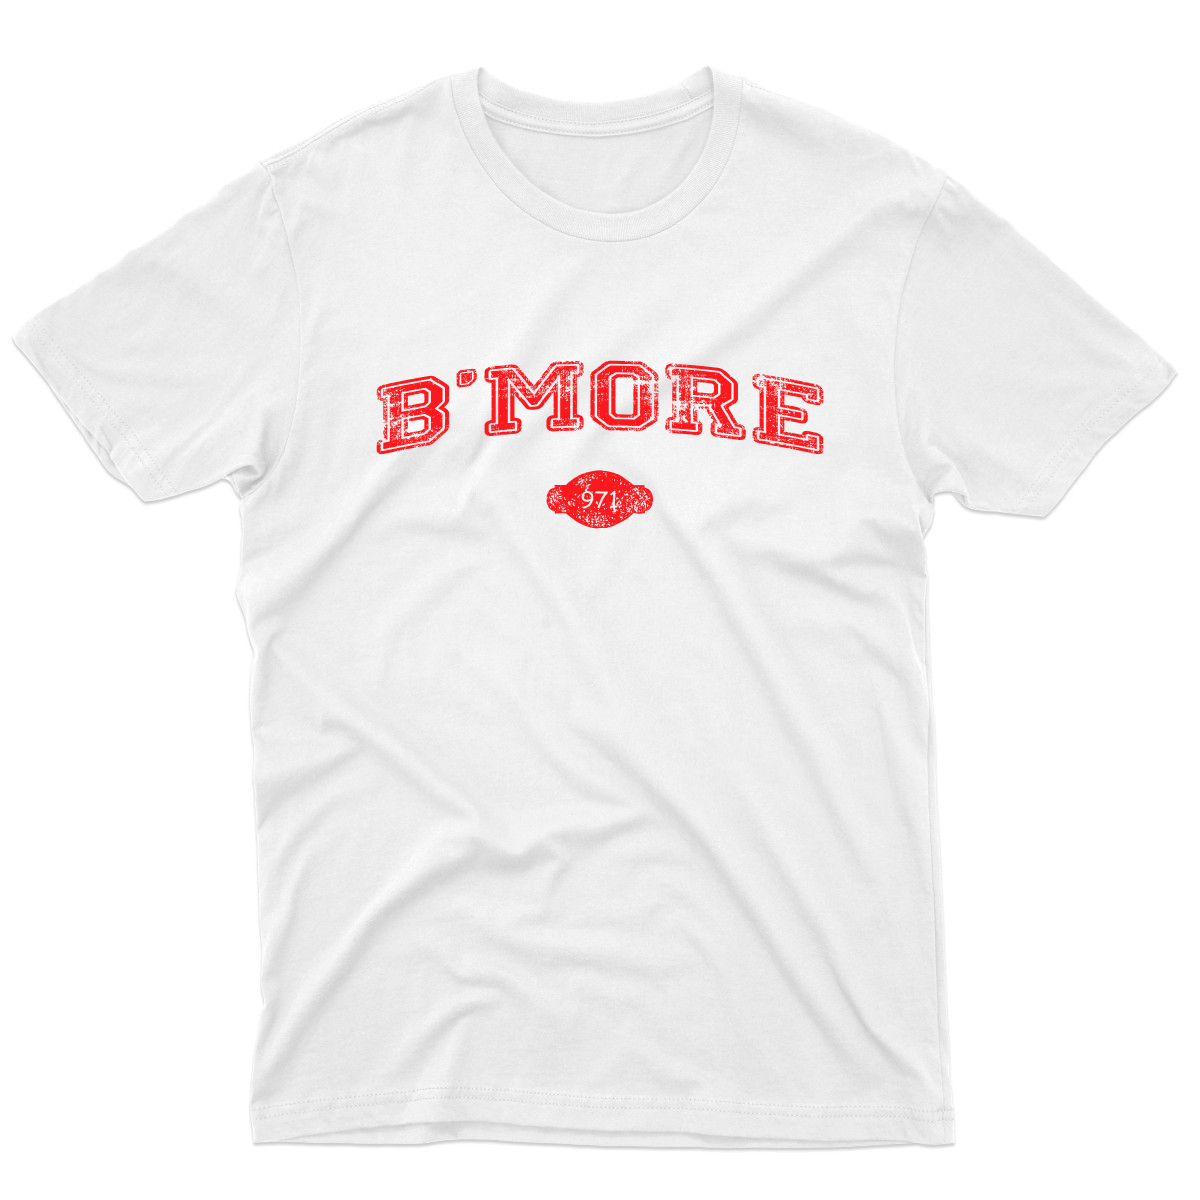 B'more 1729 Represent Men's T-shirt | White